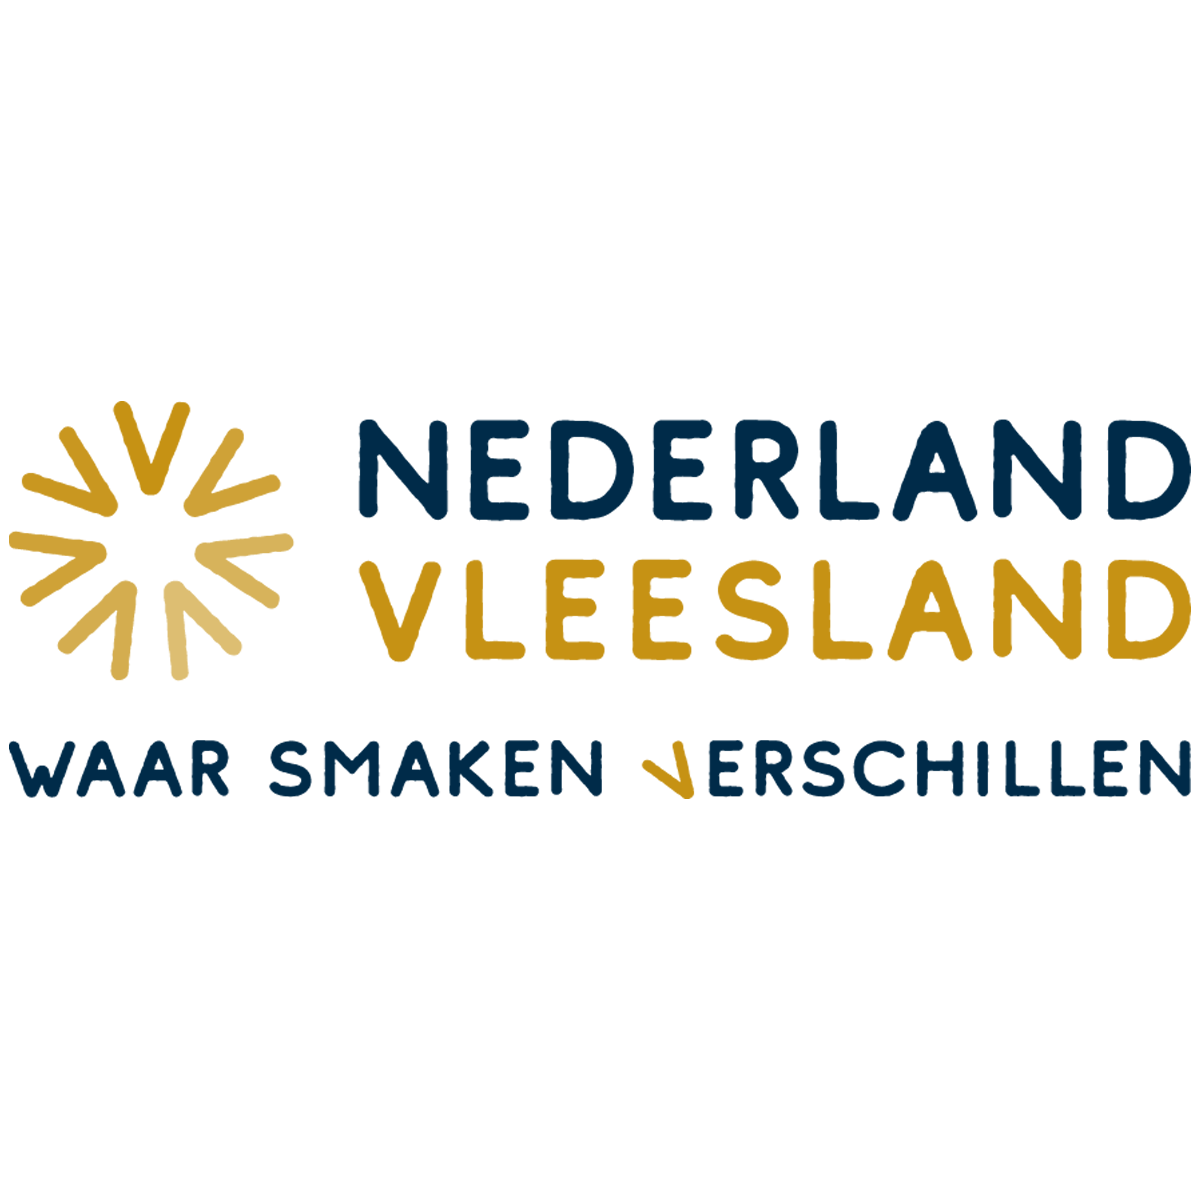 Nederland Vleesland logo website respectvee